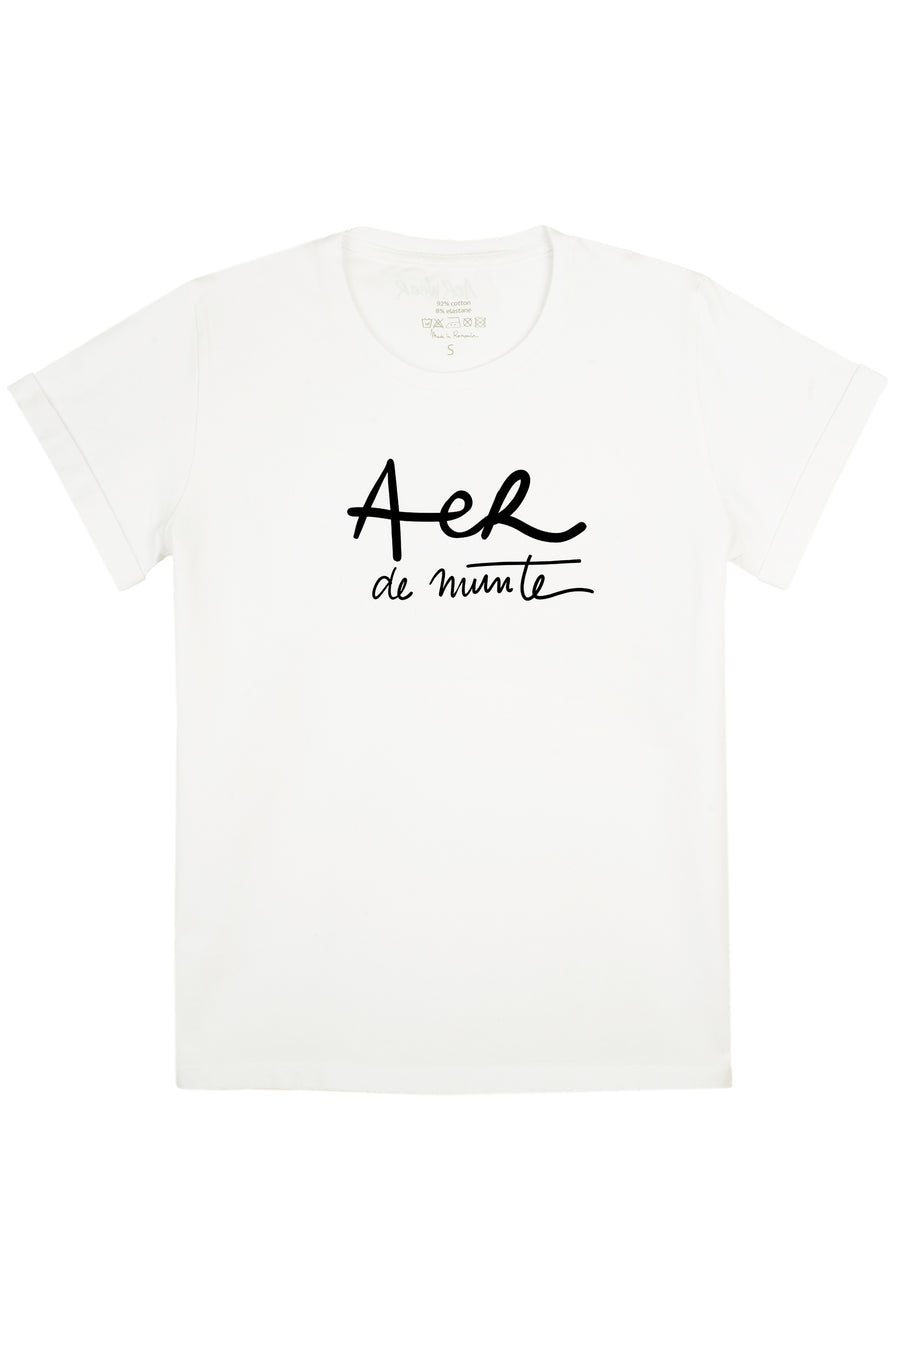 AER DE MUNTE T-shirt